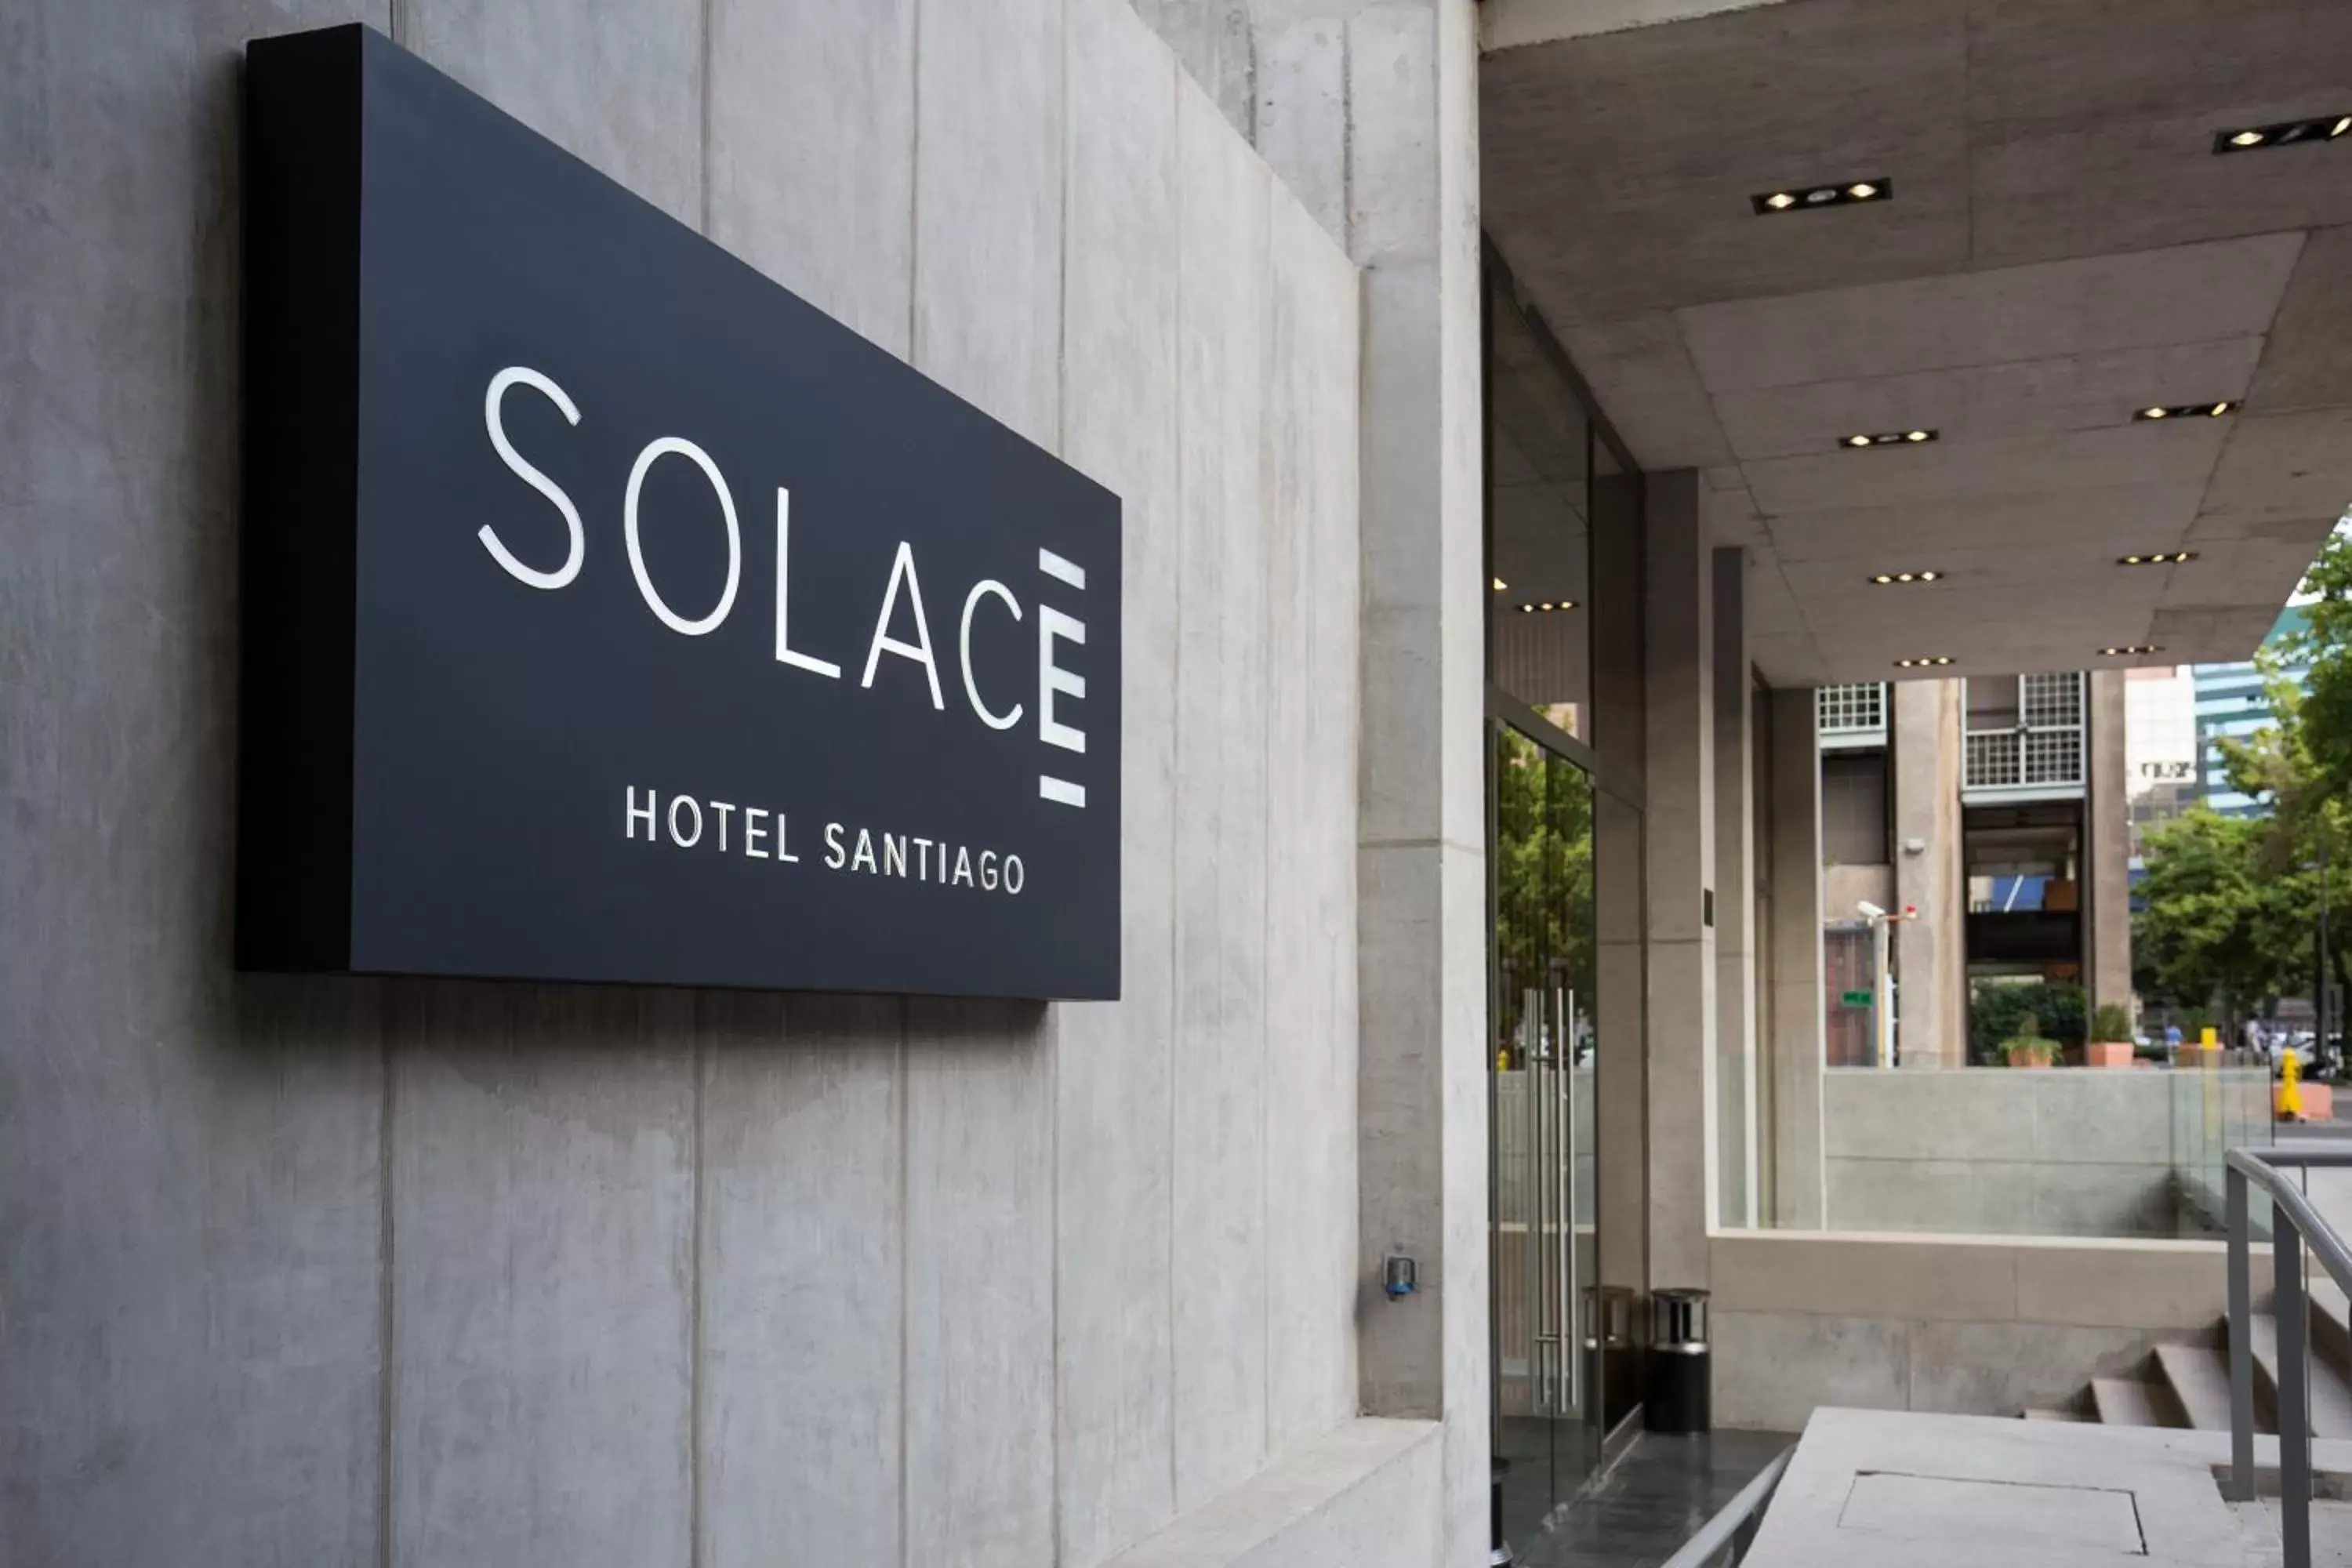 Facade/entrance in Solace Hotel Santiago